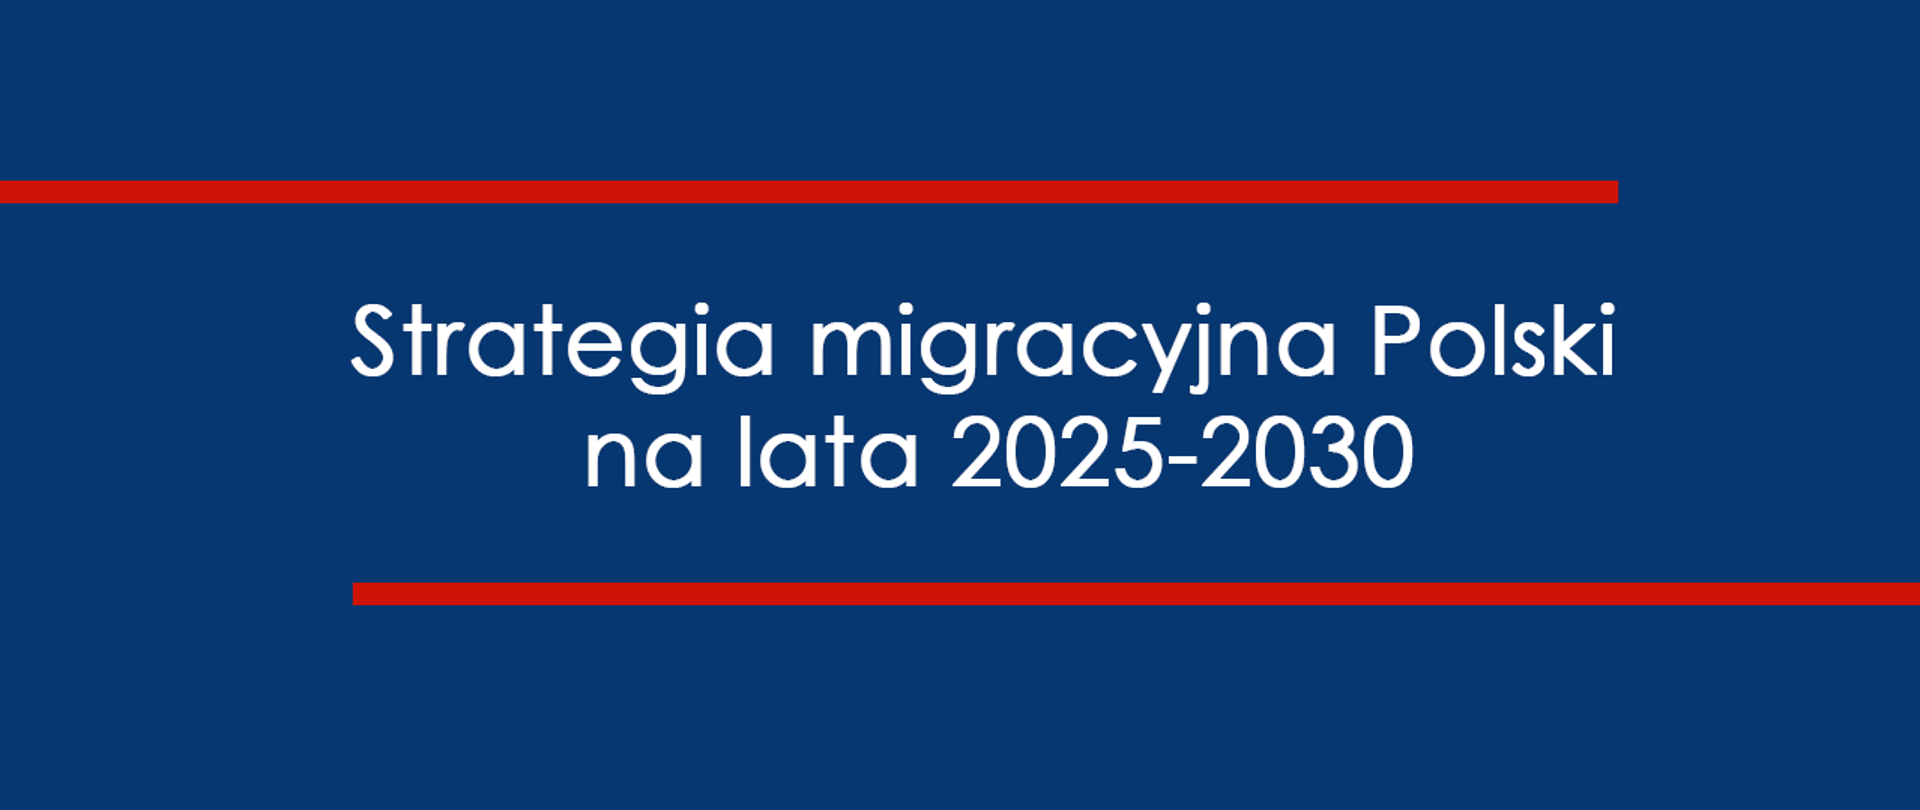 Strategia migracyjna Polski na lata 2025-2030